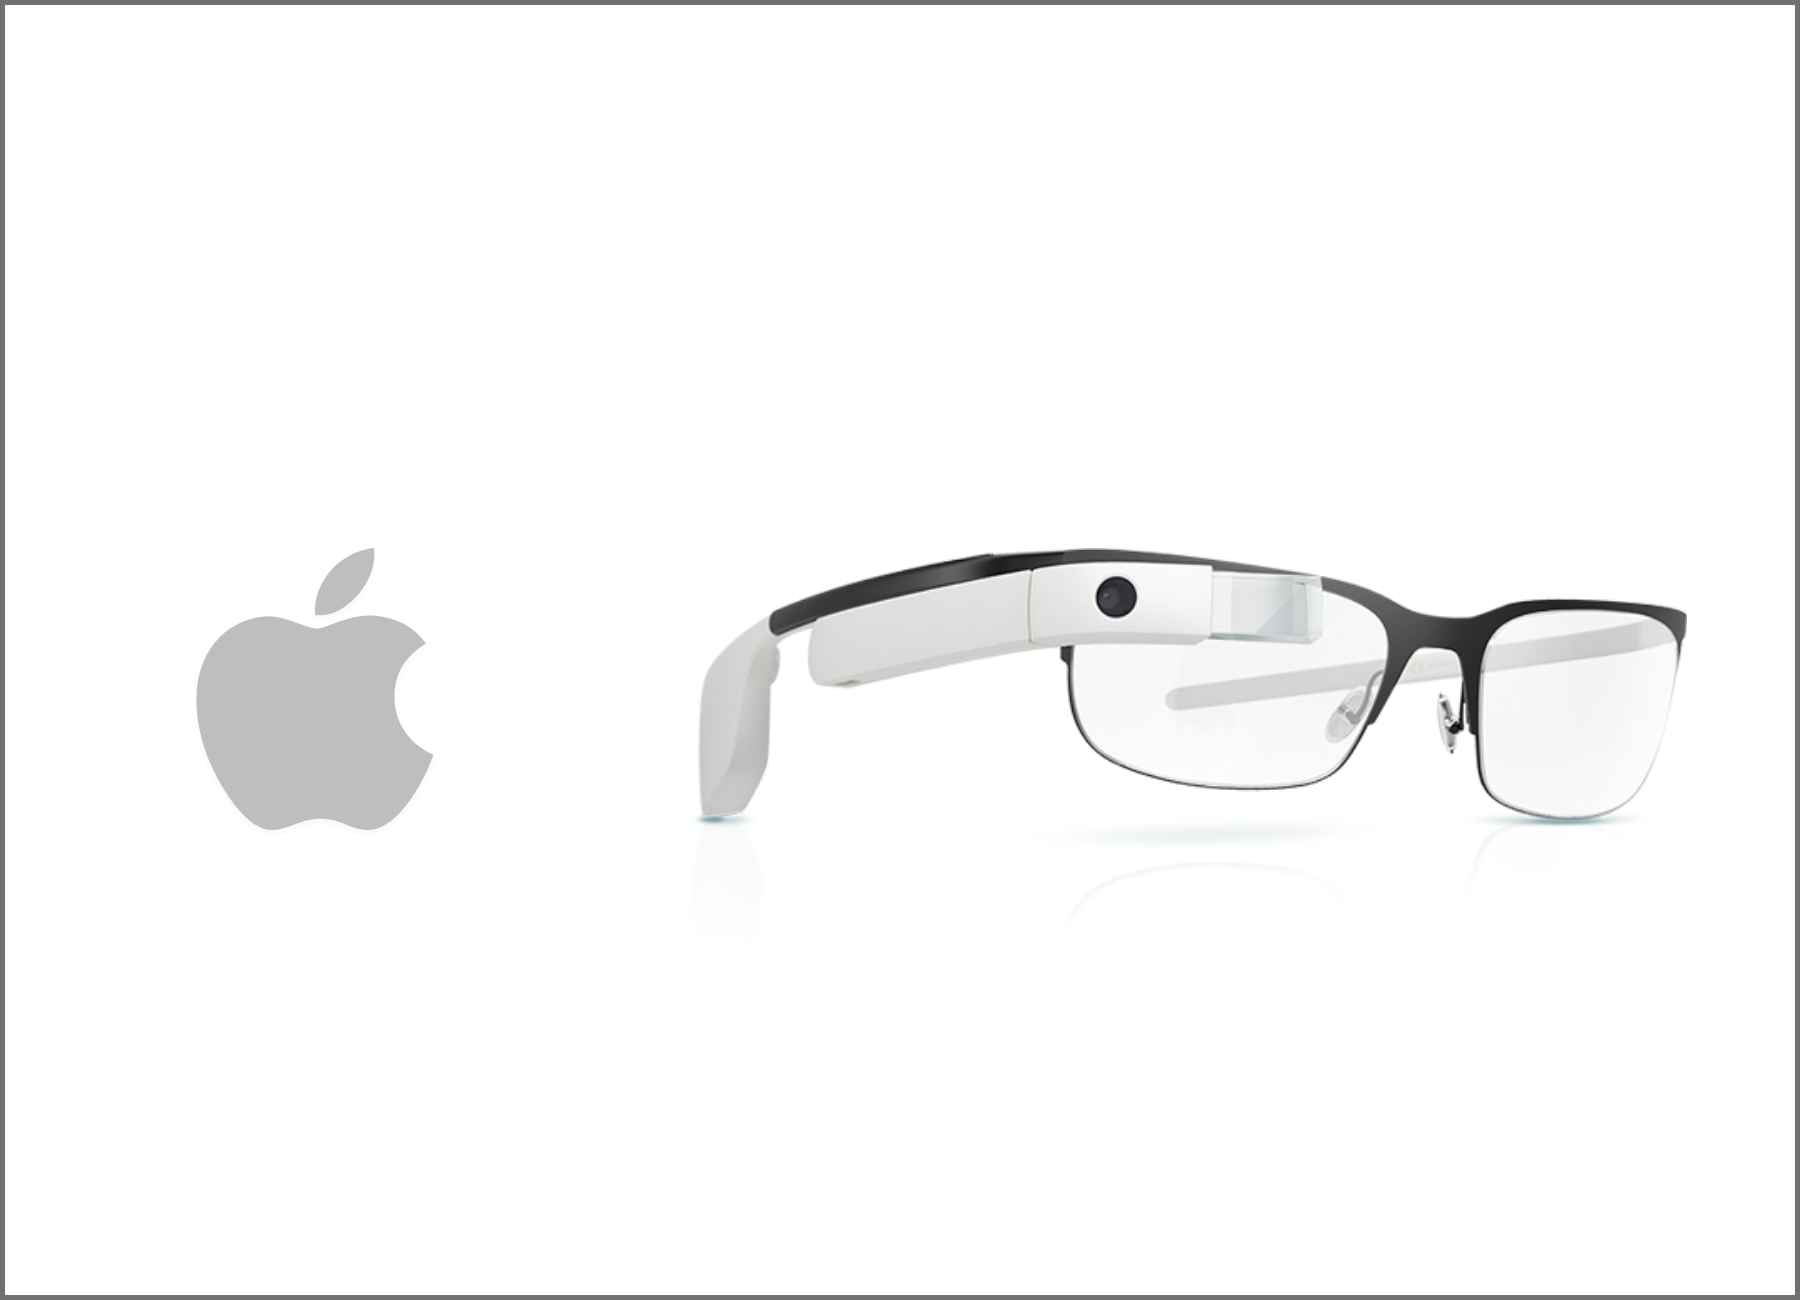 https://www.zazz.io/blog/wp-content/uploads/2020/06/Apple-Smart-Glasses-Zazz-1.png